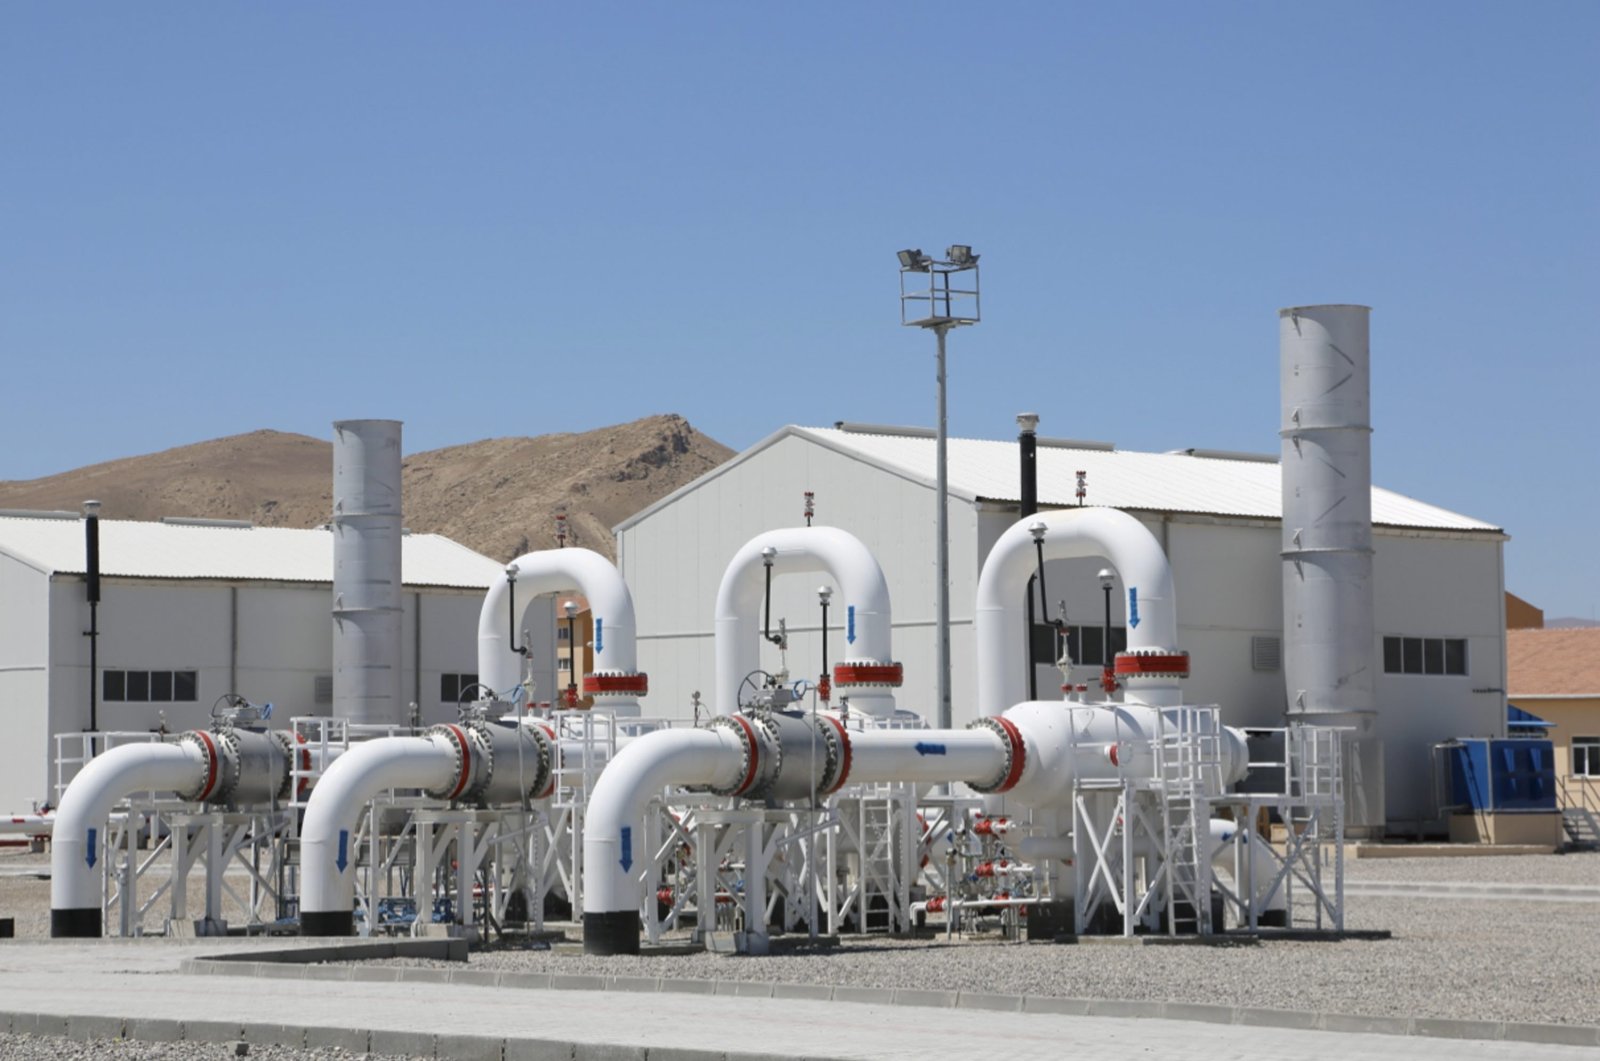 BOTAŞ natural gas station in Erzincan, Turkey, Feb. 8, 2013. (Sabah File Photo)